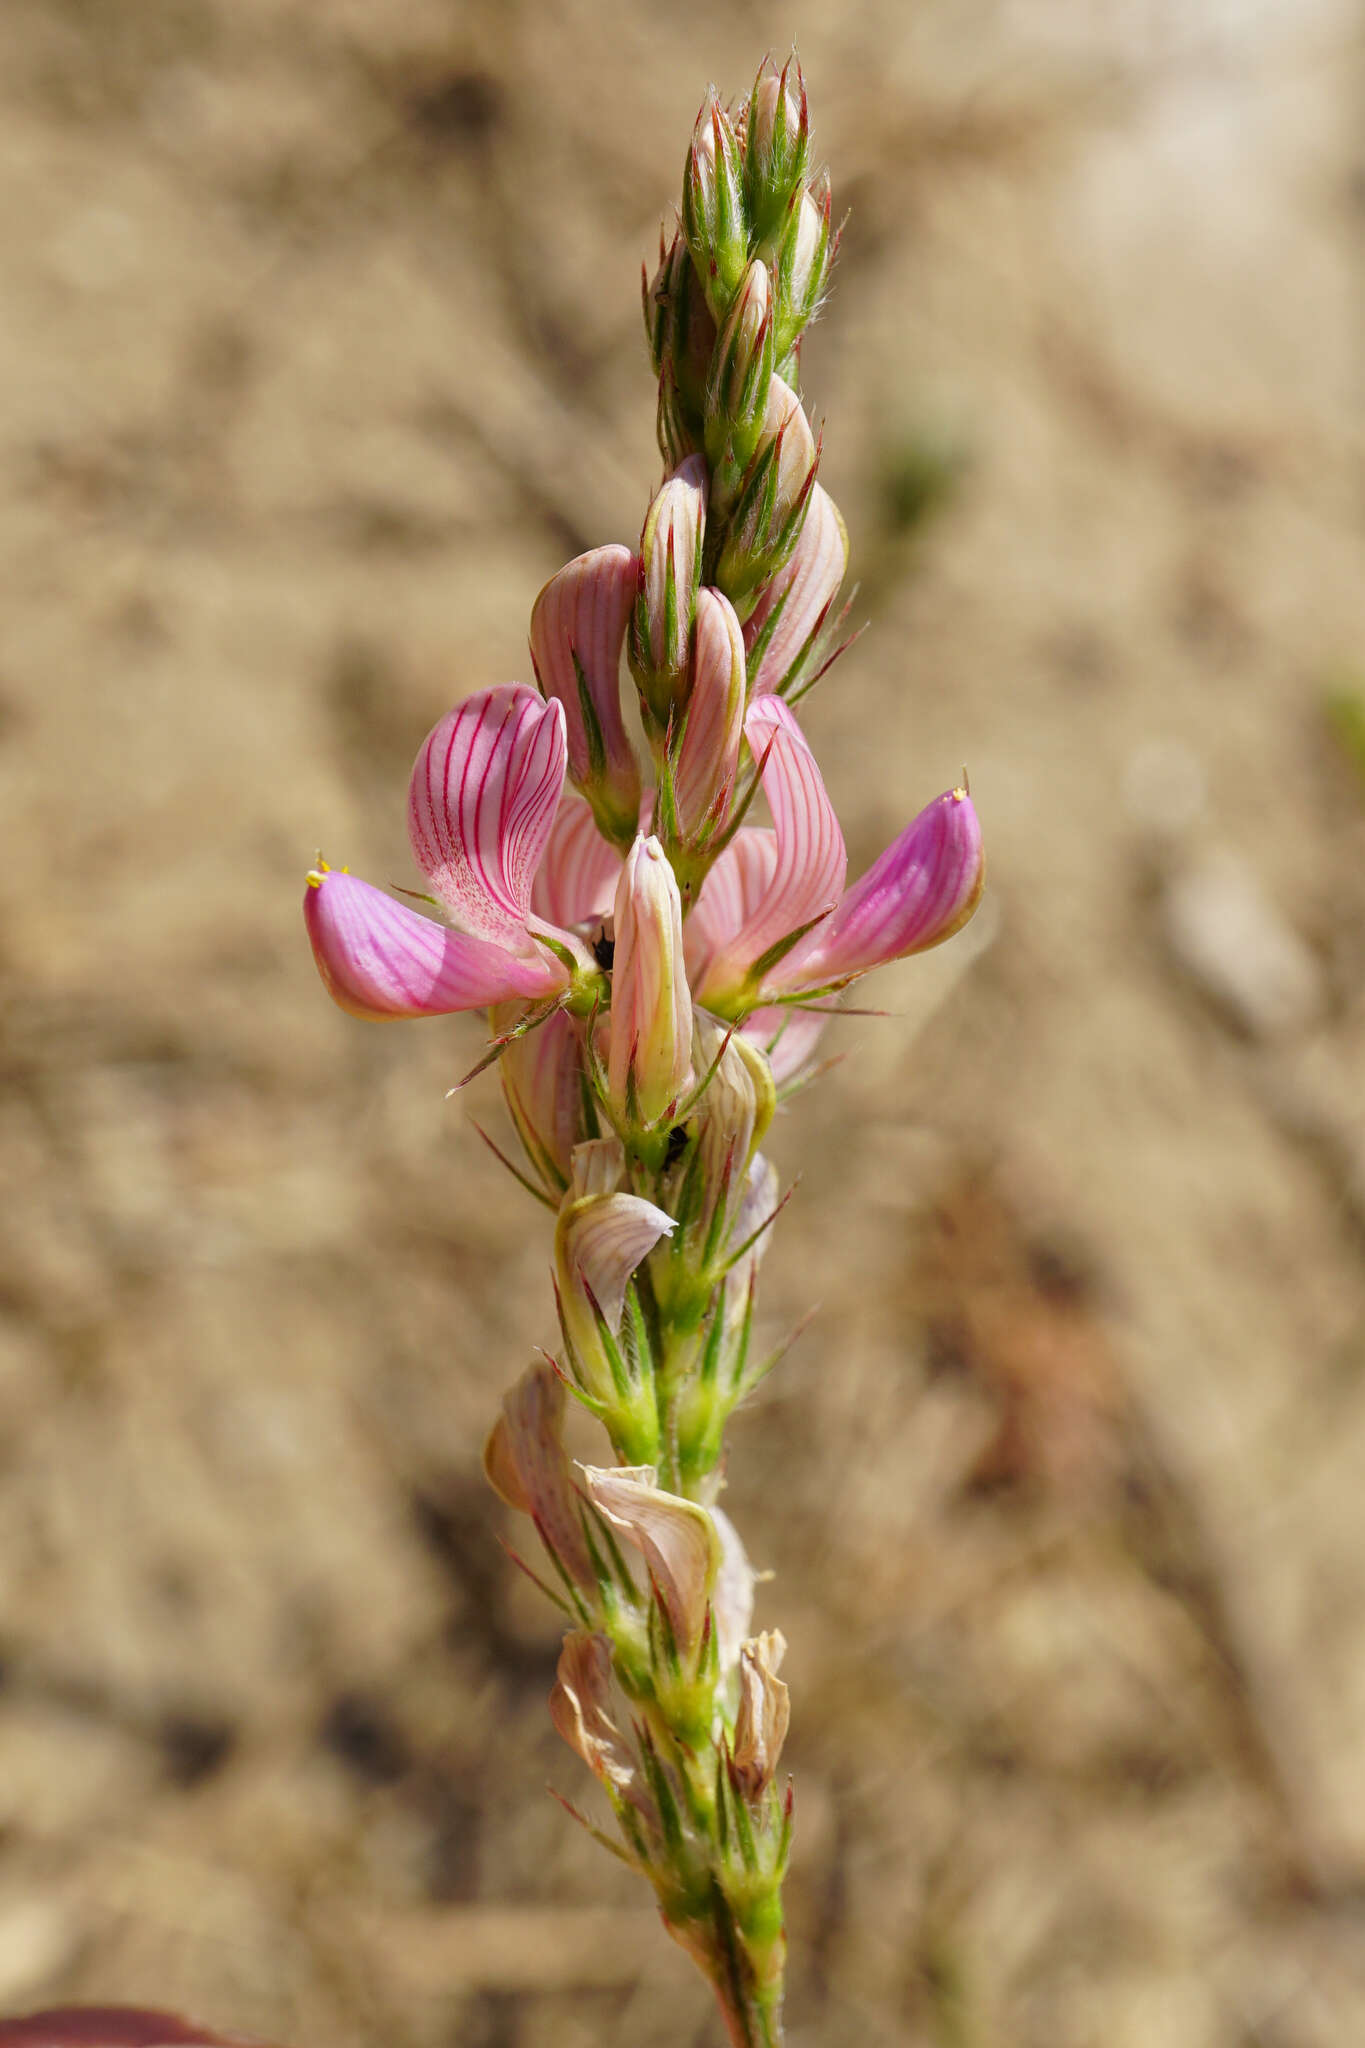 Image of Onobrychis arenaria subsp. arenaria